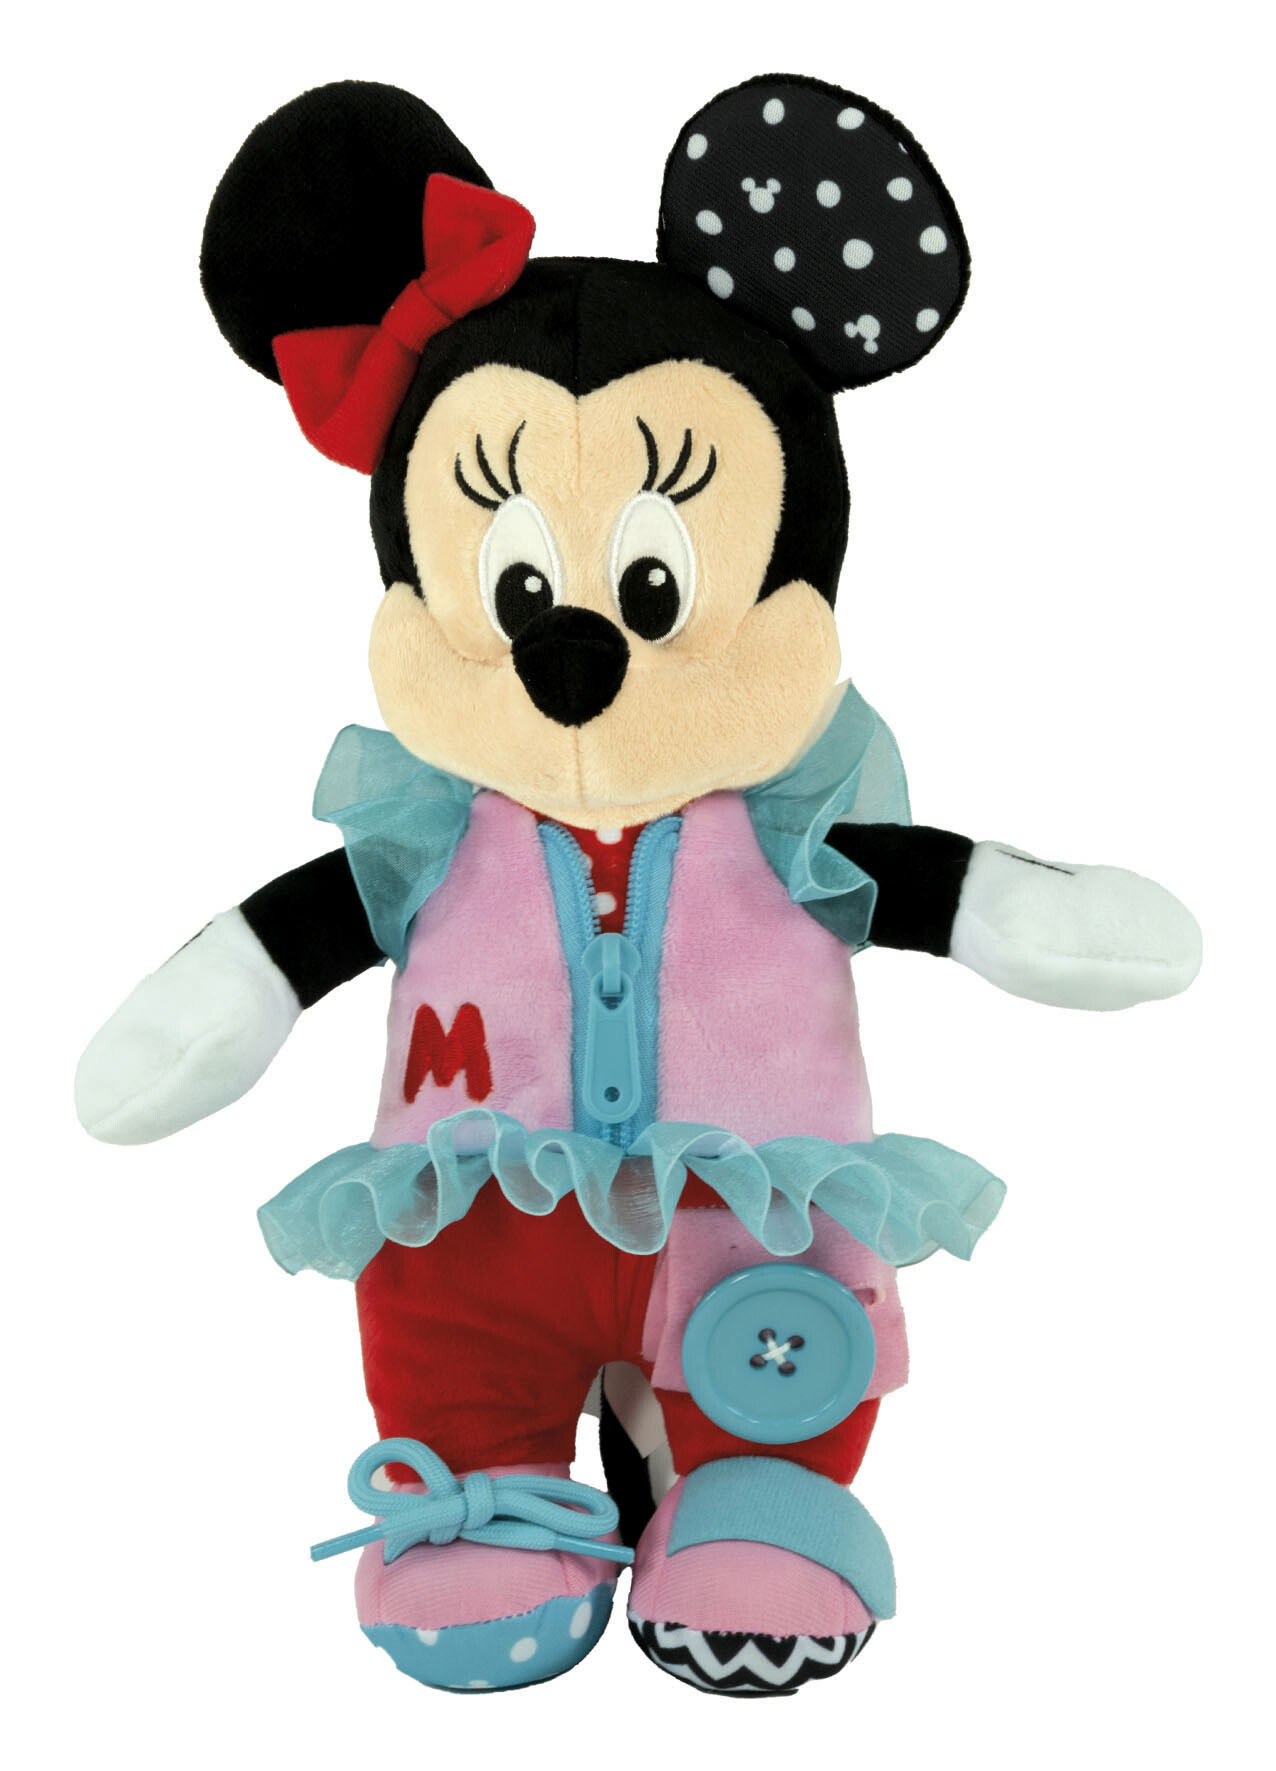 Disney baby minnie dress me up plush - BABY CLEMENTONI